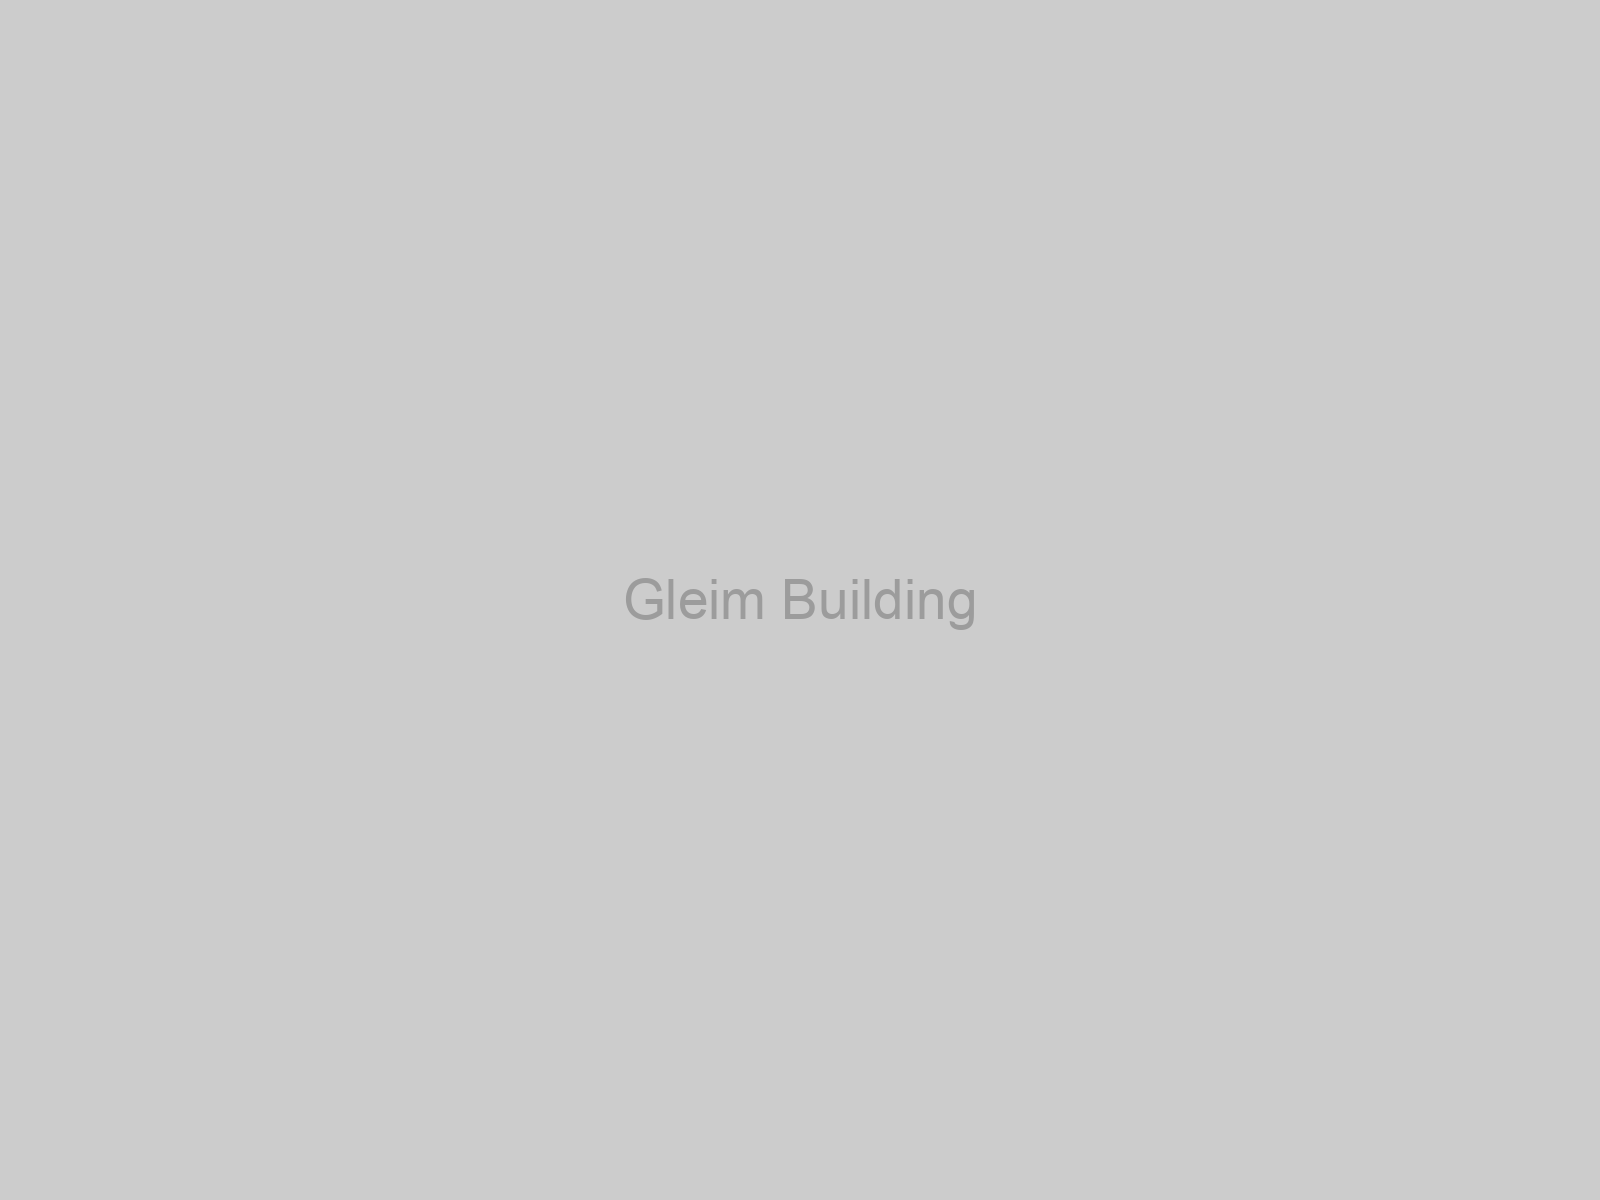 Gleim Building